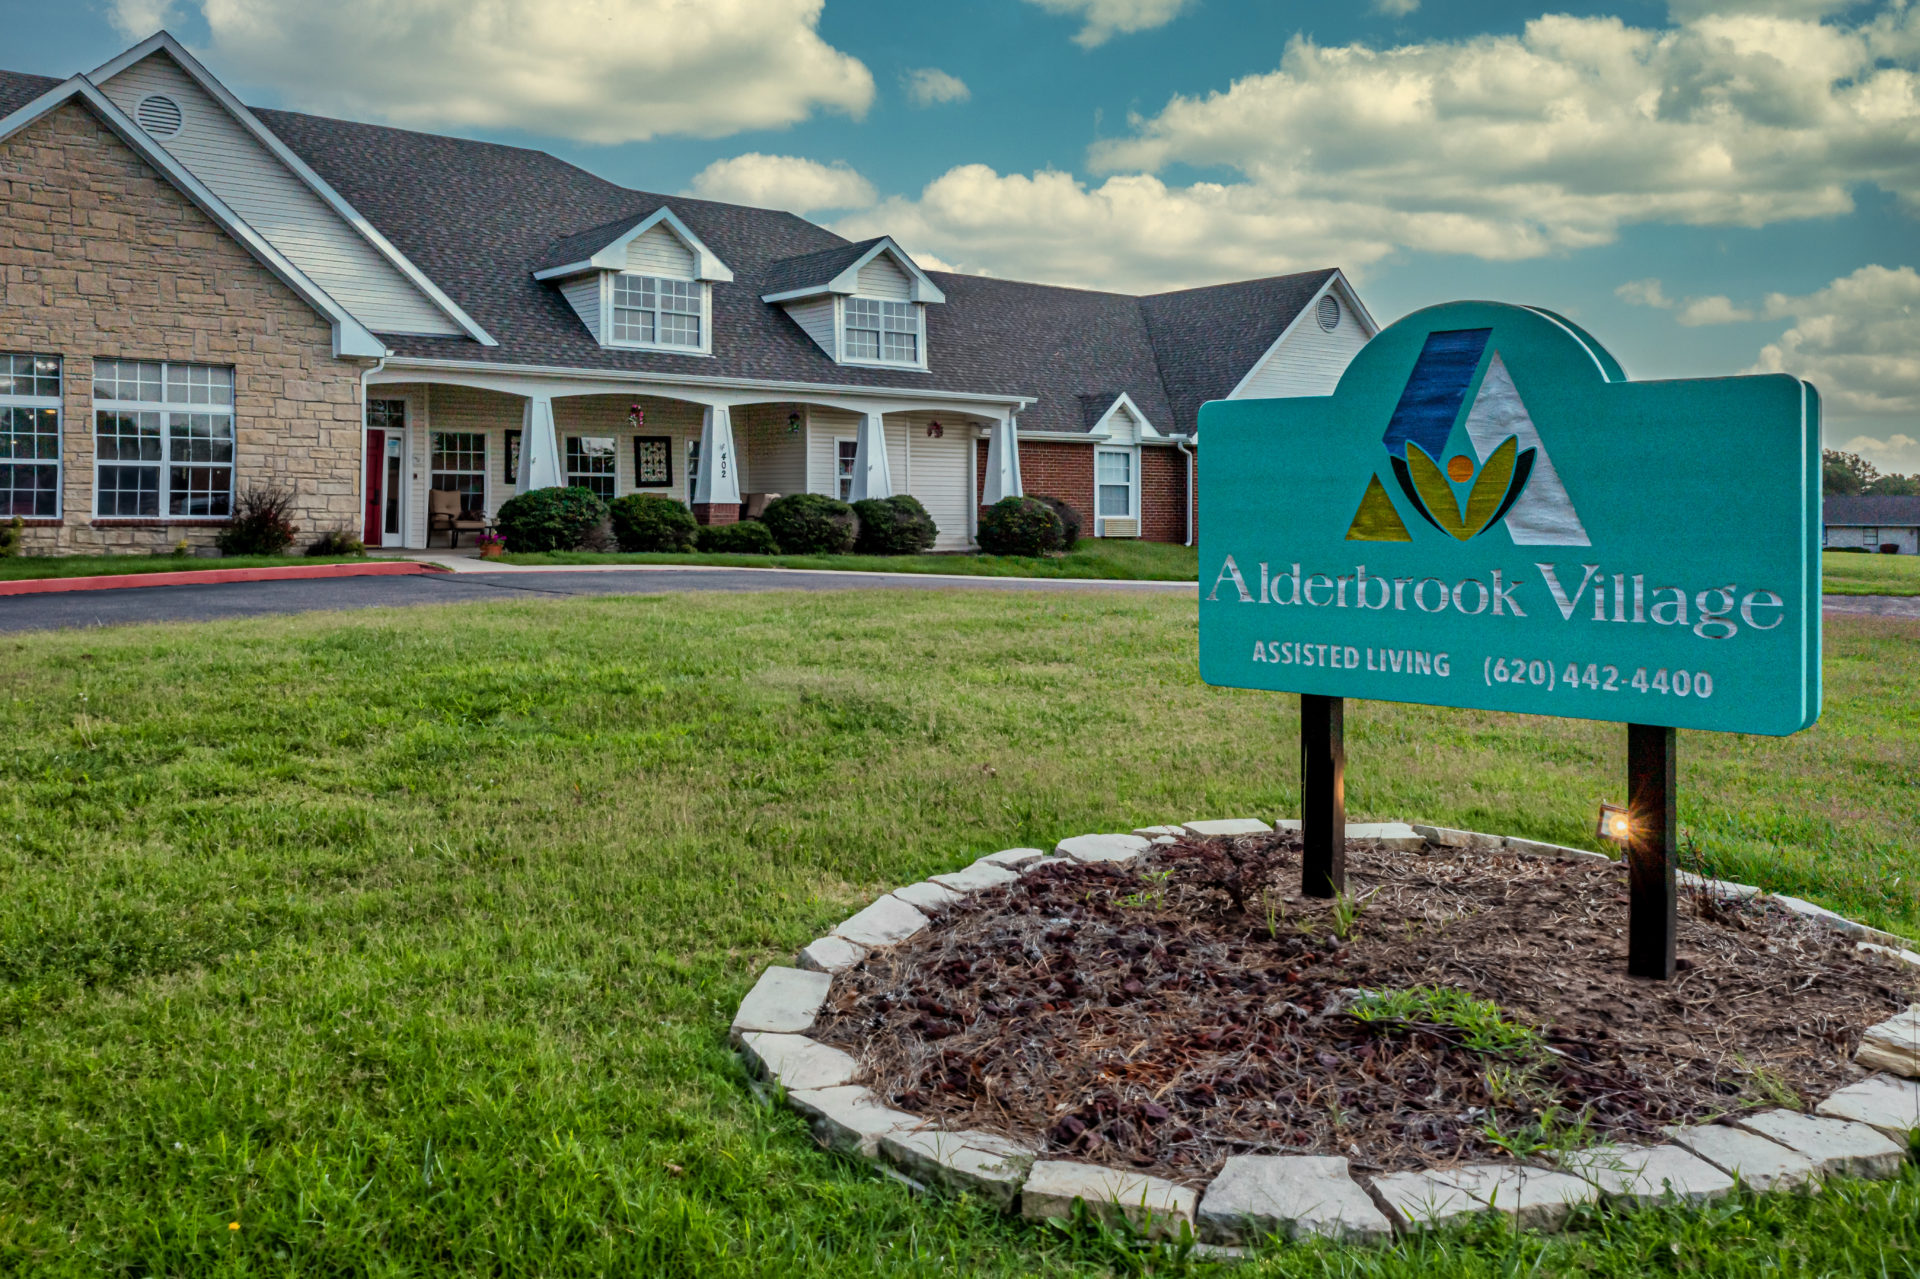 Gallery | Photos of Alderbrook Village Assisted Living in Arkansas City, KS